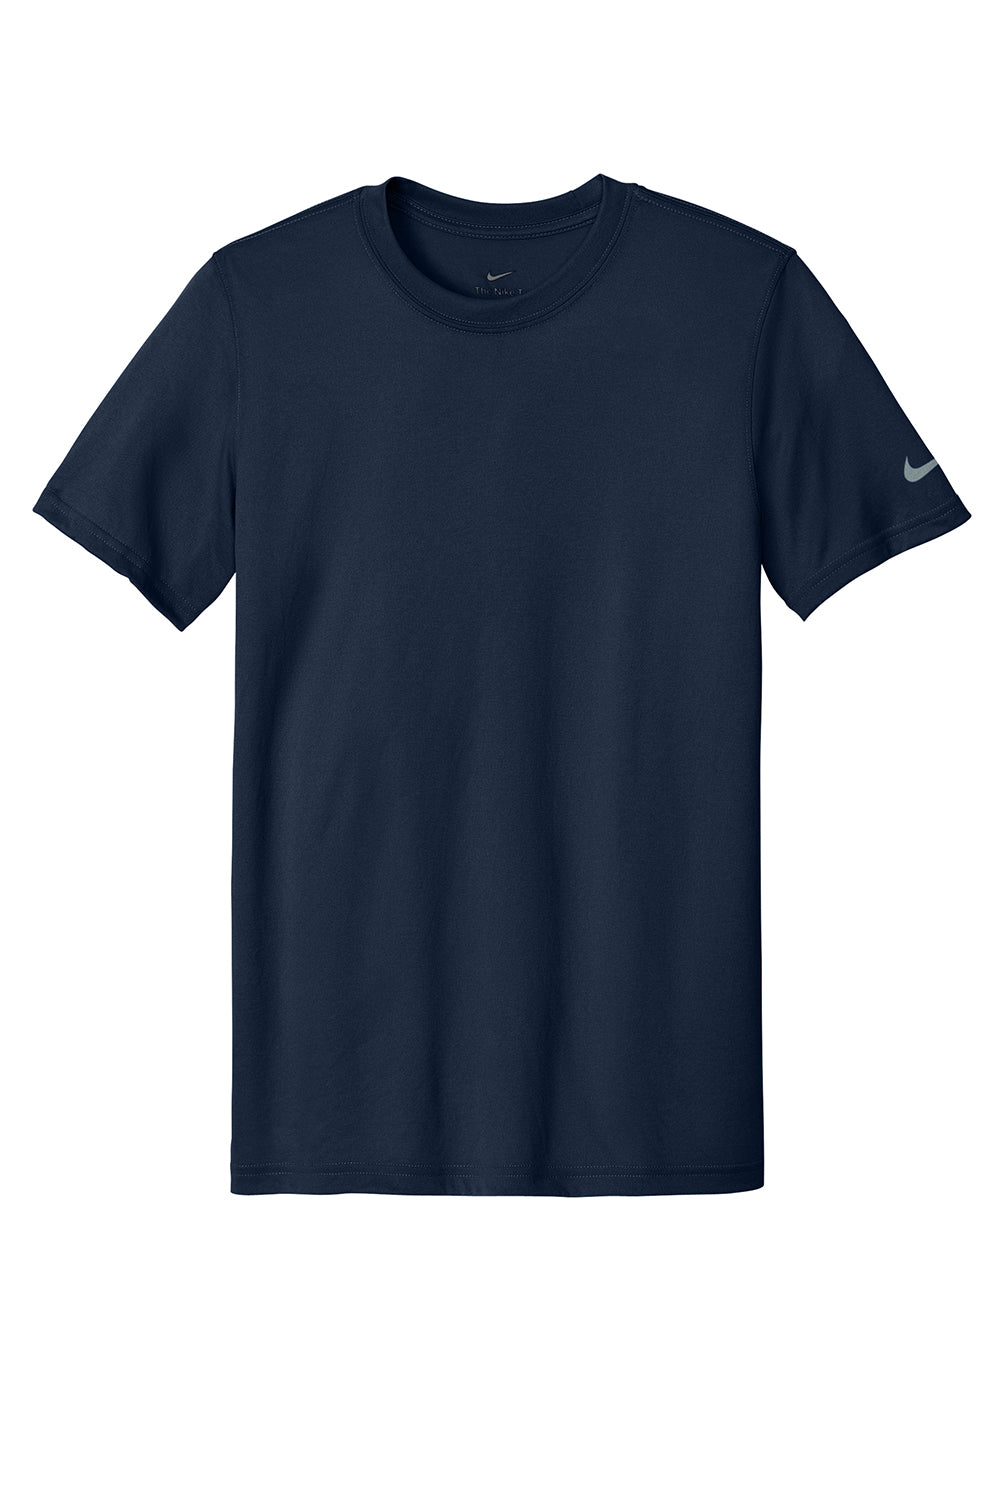 Nike NKDX8730 Mens rLegend Dri-Fit Moisture Wicking Short Sleeve Crewneck T-Shirt College Navy Blue Flat Front